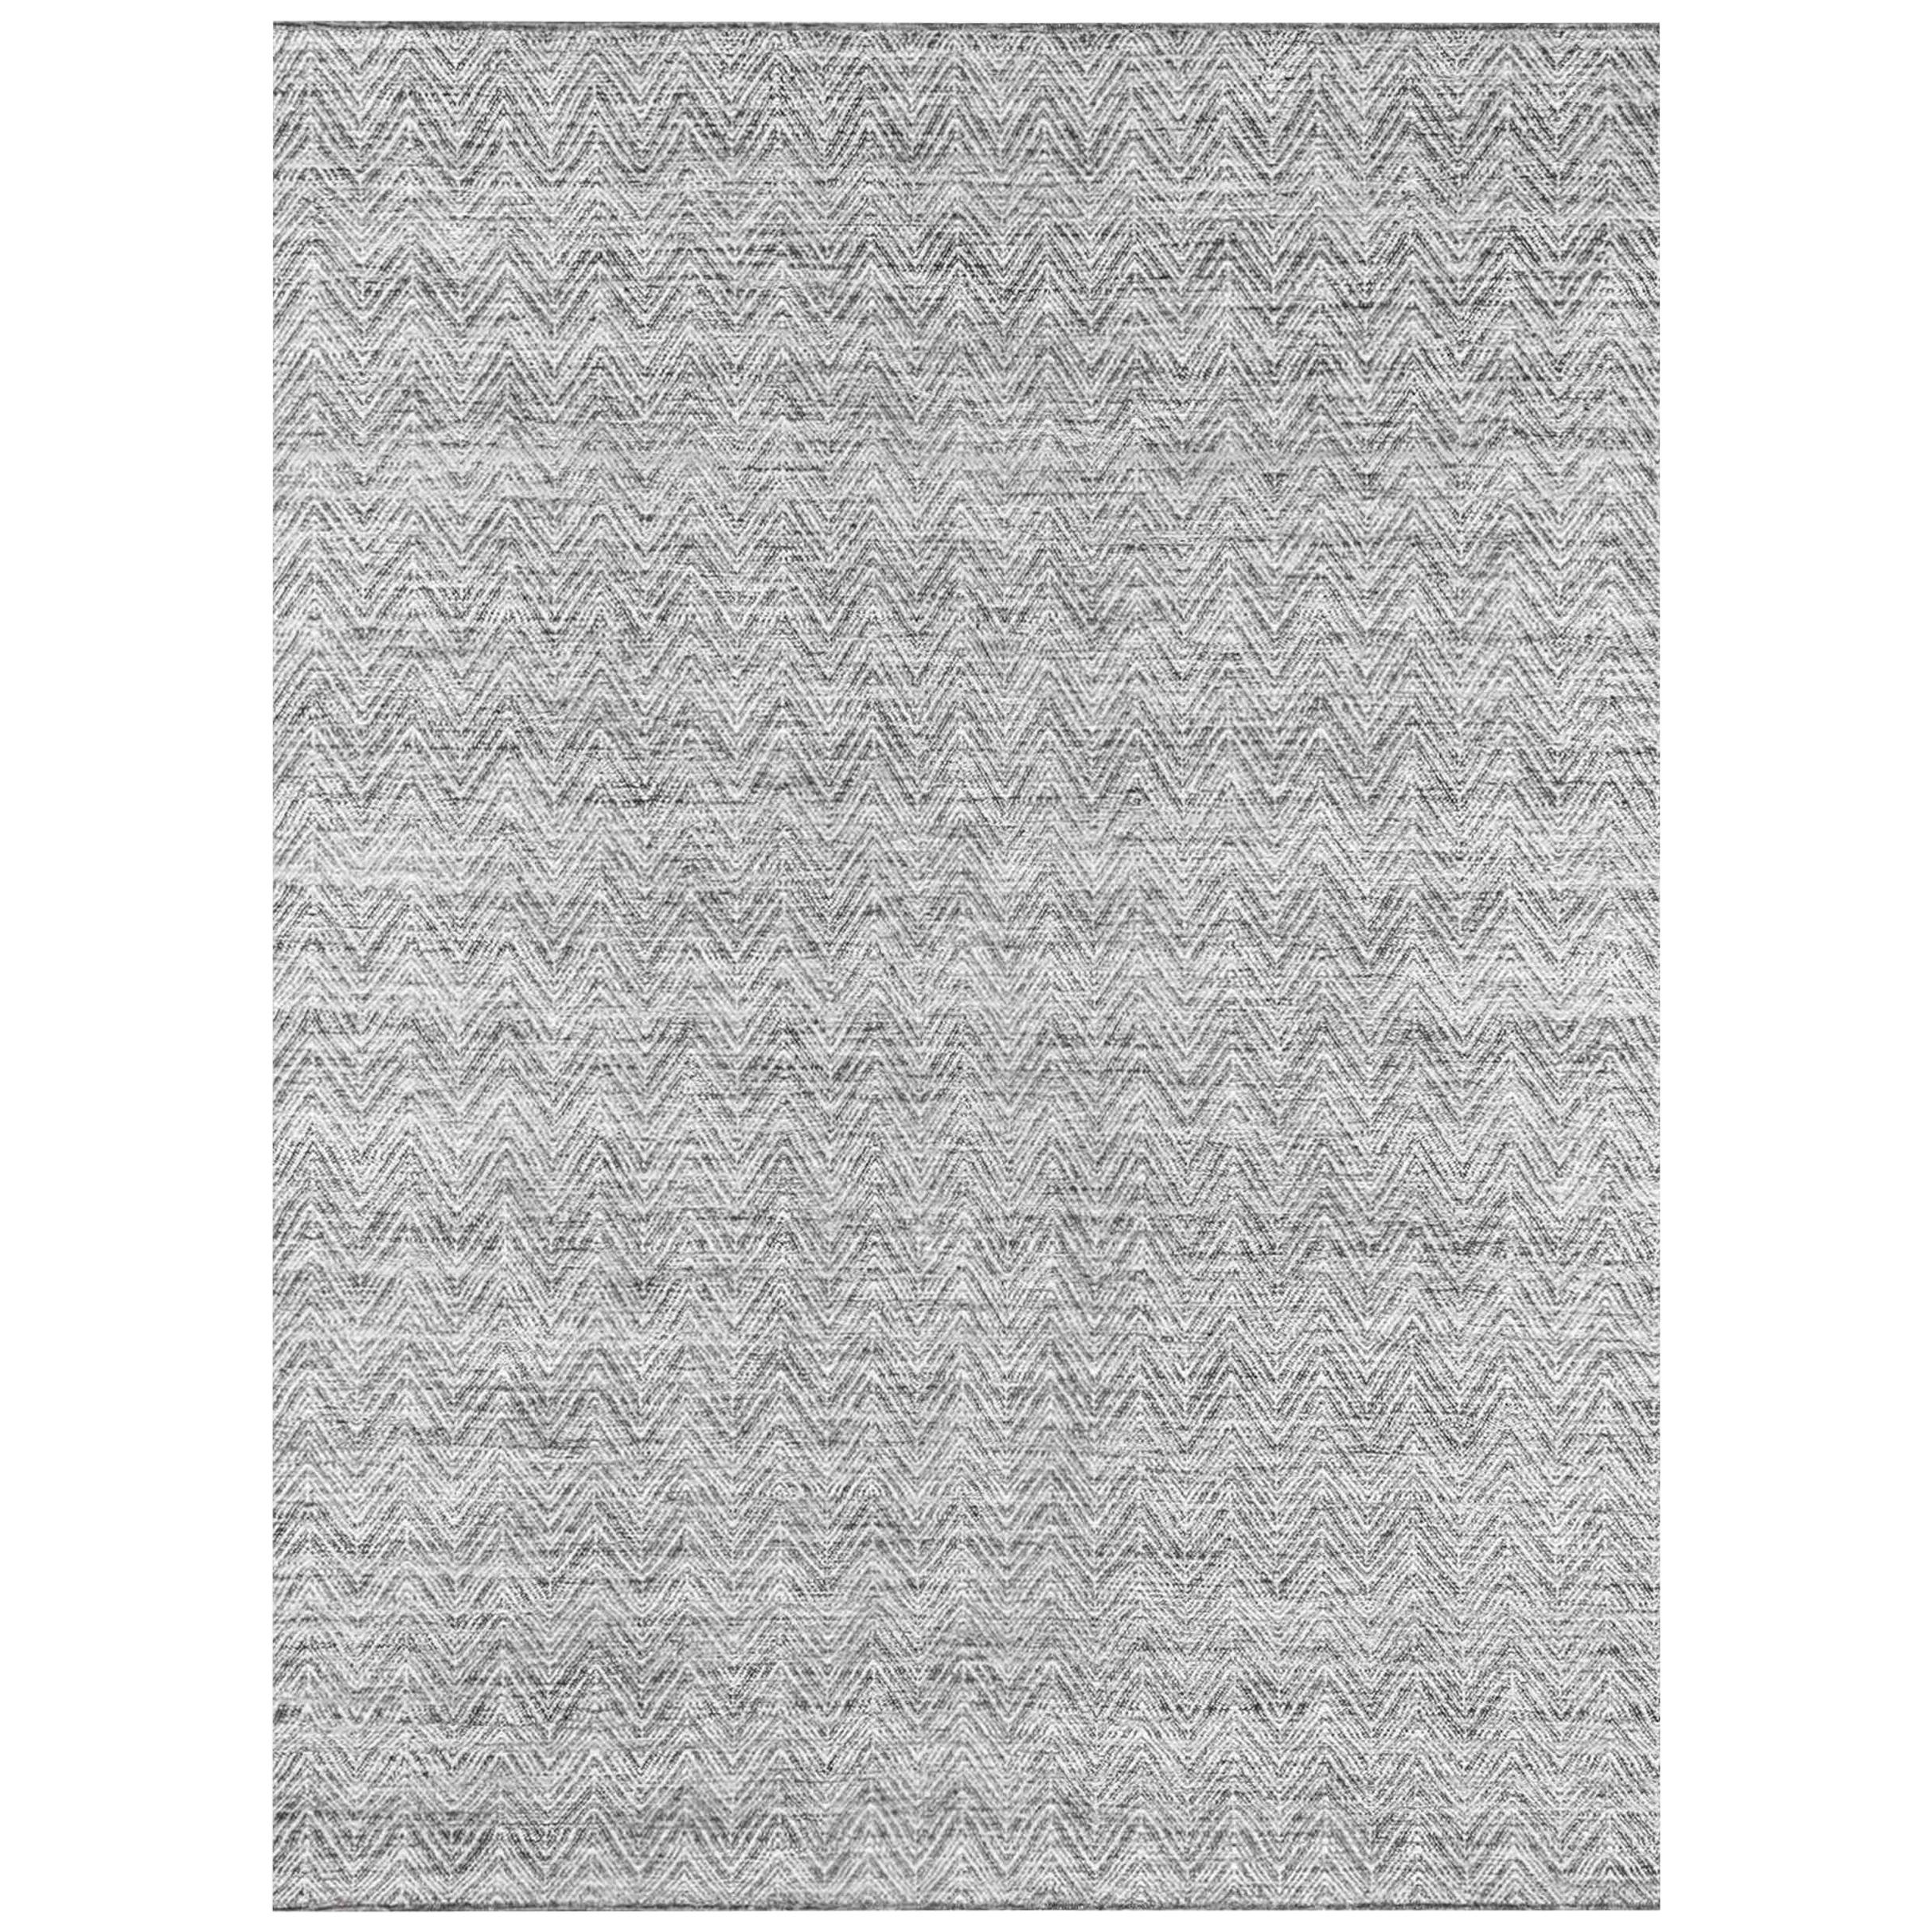 For Sale: Black (Charcoal) Ben Soleimani Ceyah Rug– Hand-woven Plush Textured Wool + Linen Charcoal 9'x12'